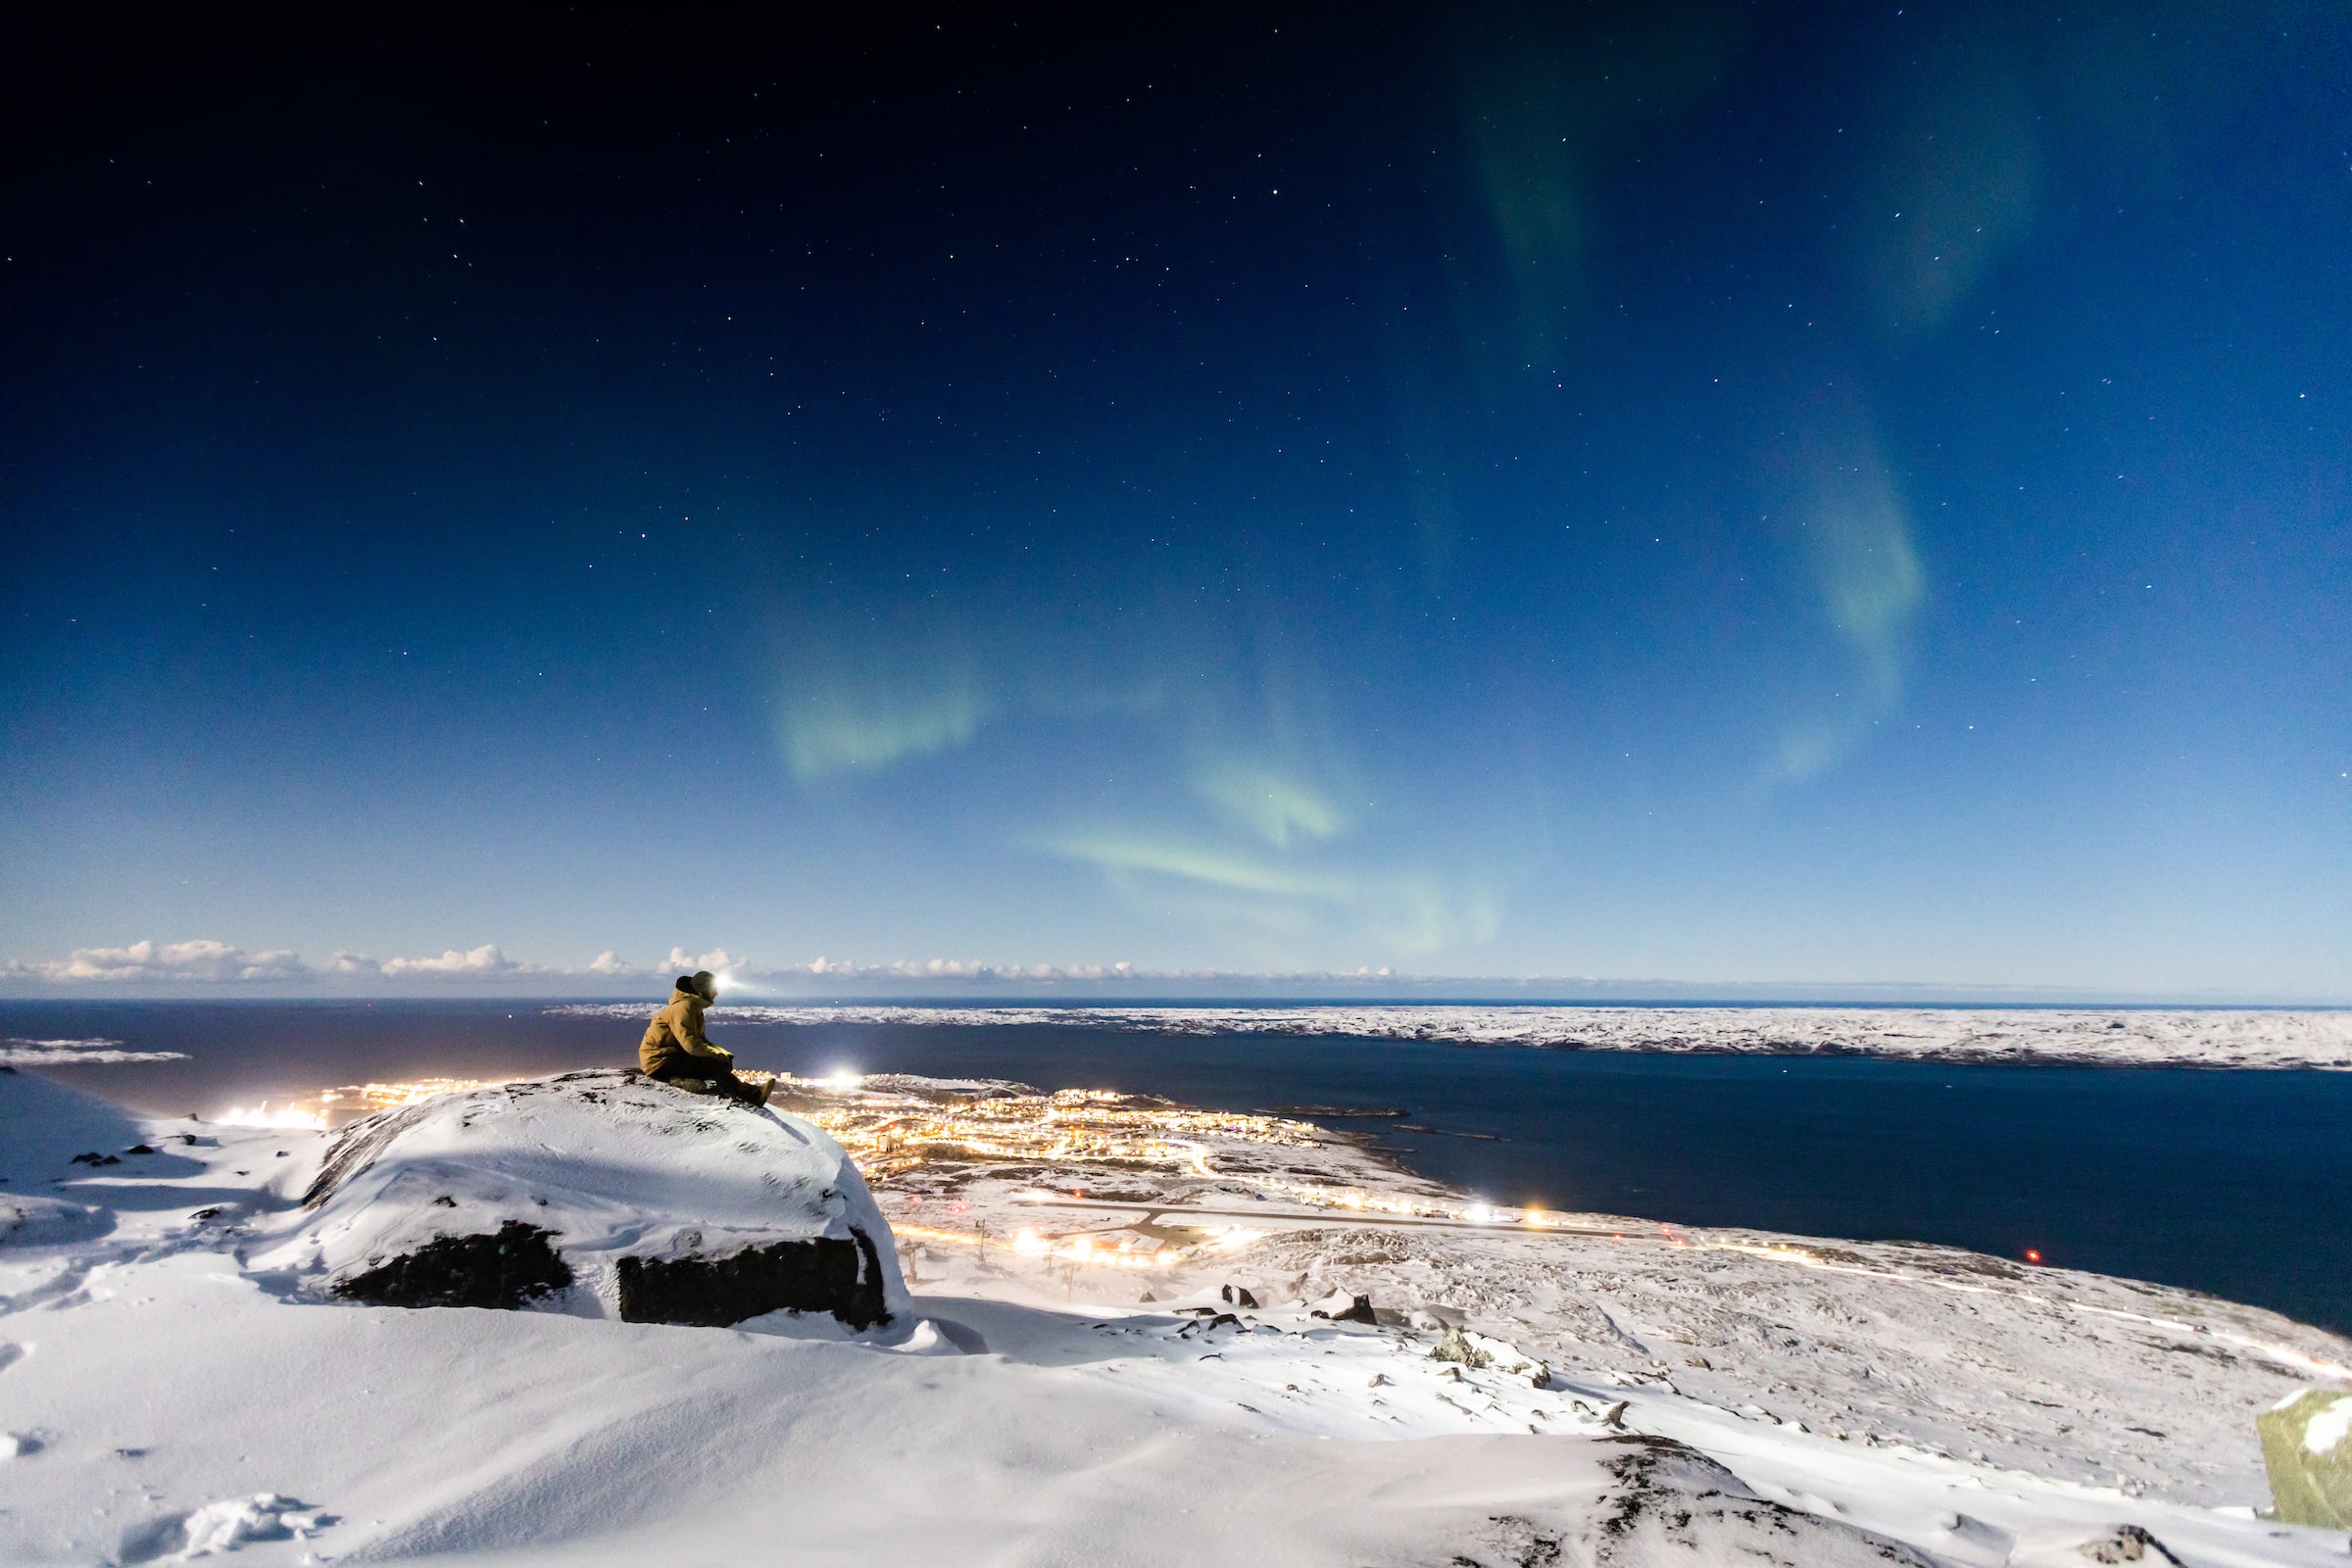 Nuuk - On Top By Night. Photo - Matthew Littlewood, Visit Greenland